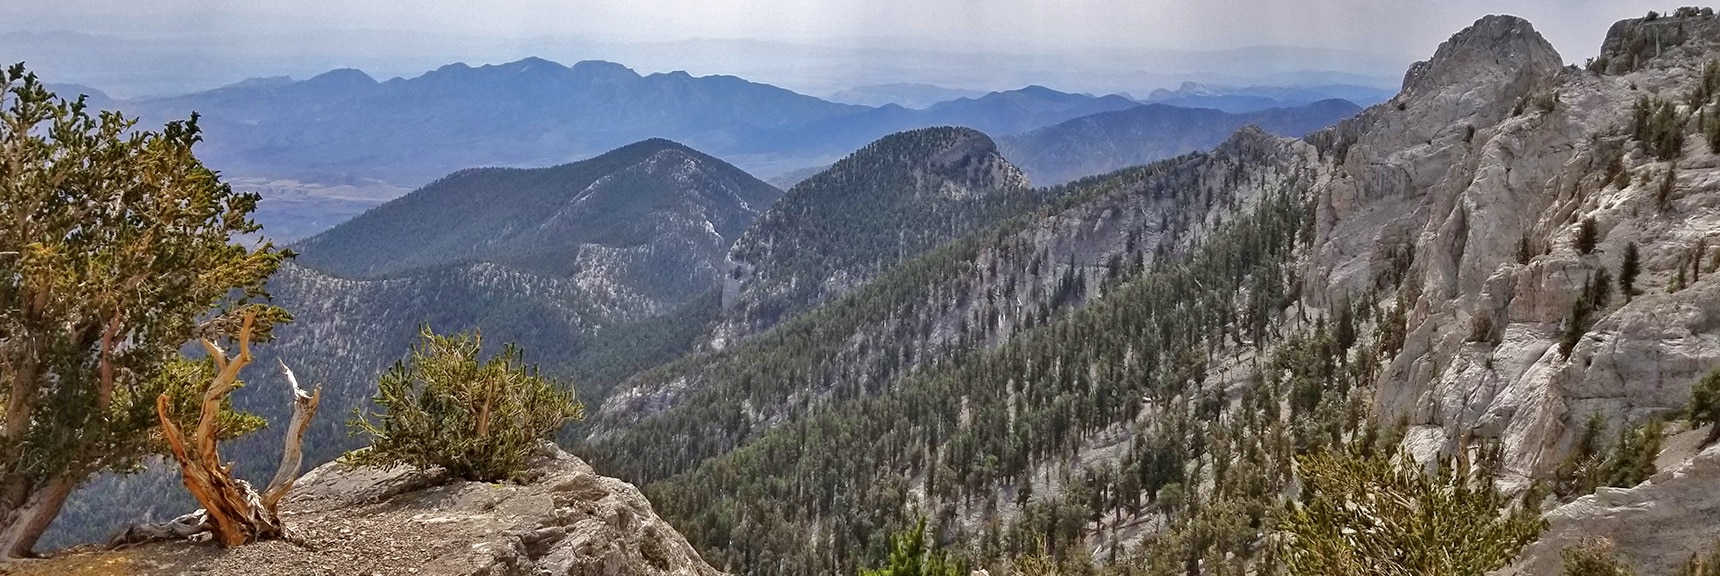 View of La Madre Mt., Fletcher Peak, Mummy Mt. Toe and Eastern Cliffs | Mummy Mountain Northern Rim Overlook, Spring Mountain Wilderness, Nevada